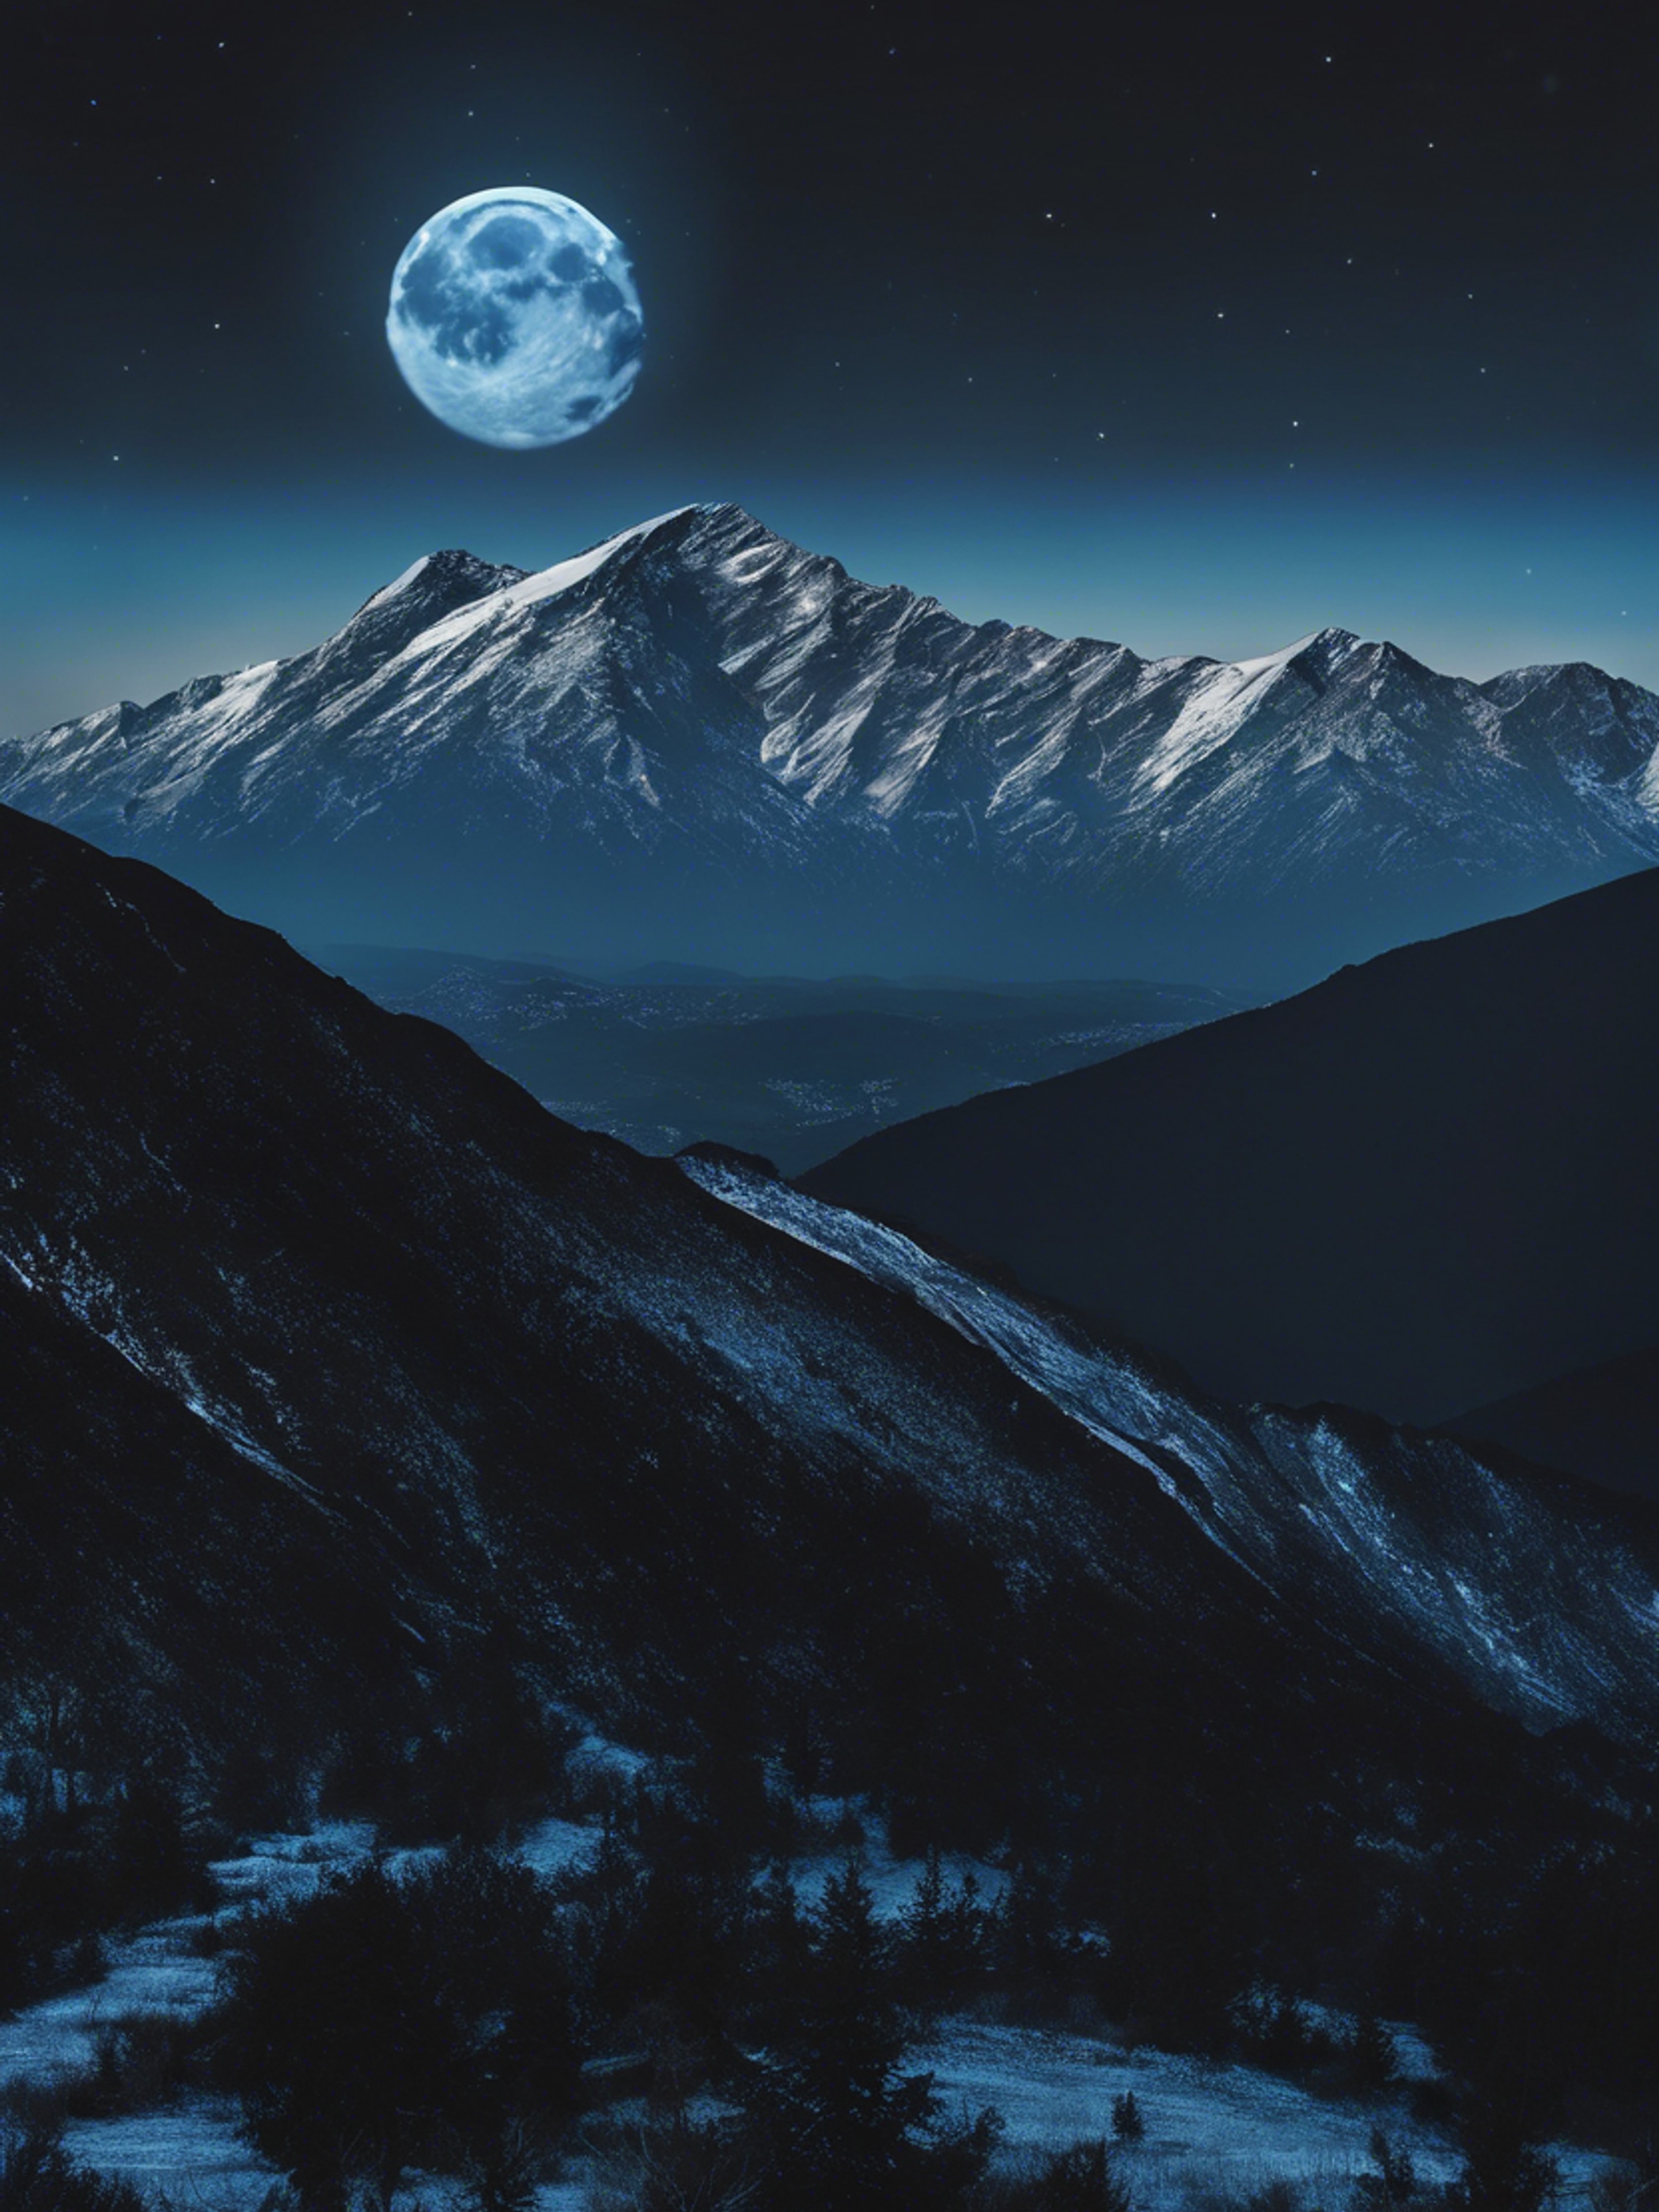 A calm blue moon illuminating the black silhouette of a serene mountain range. Tapeta[e9e6a71abde94eeebdbf]